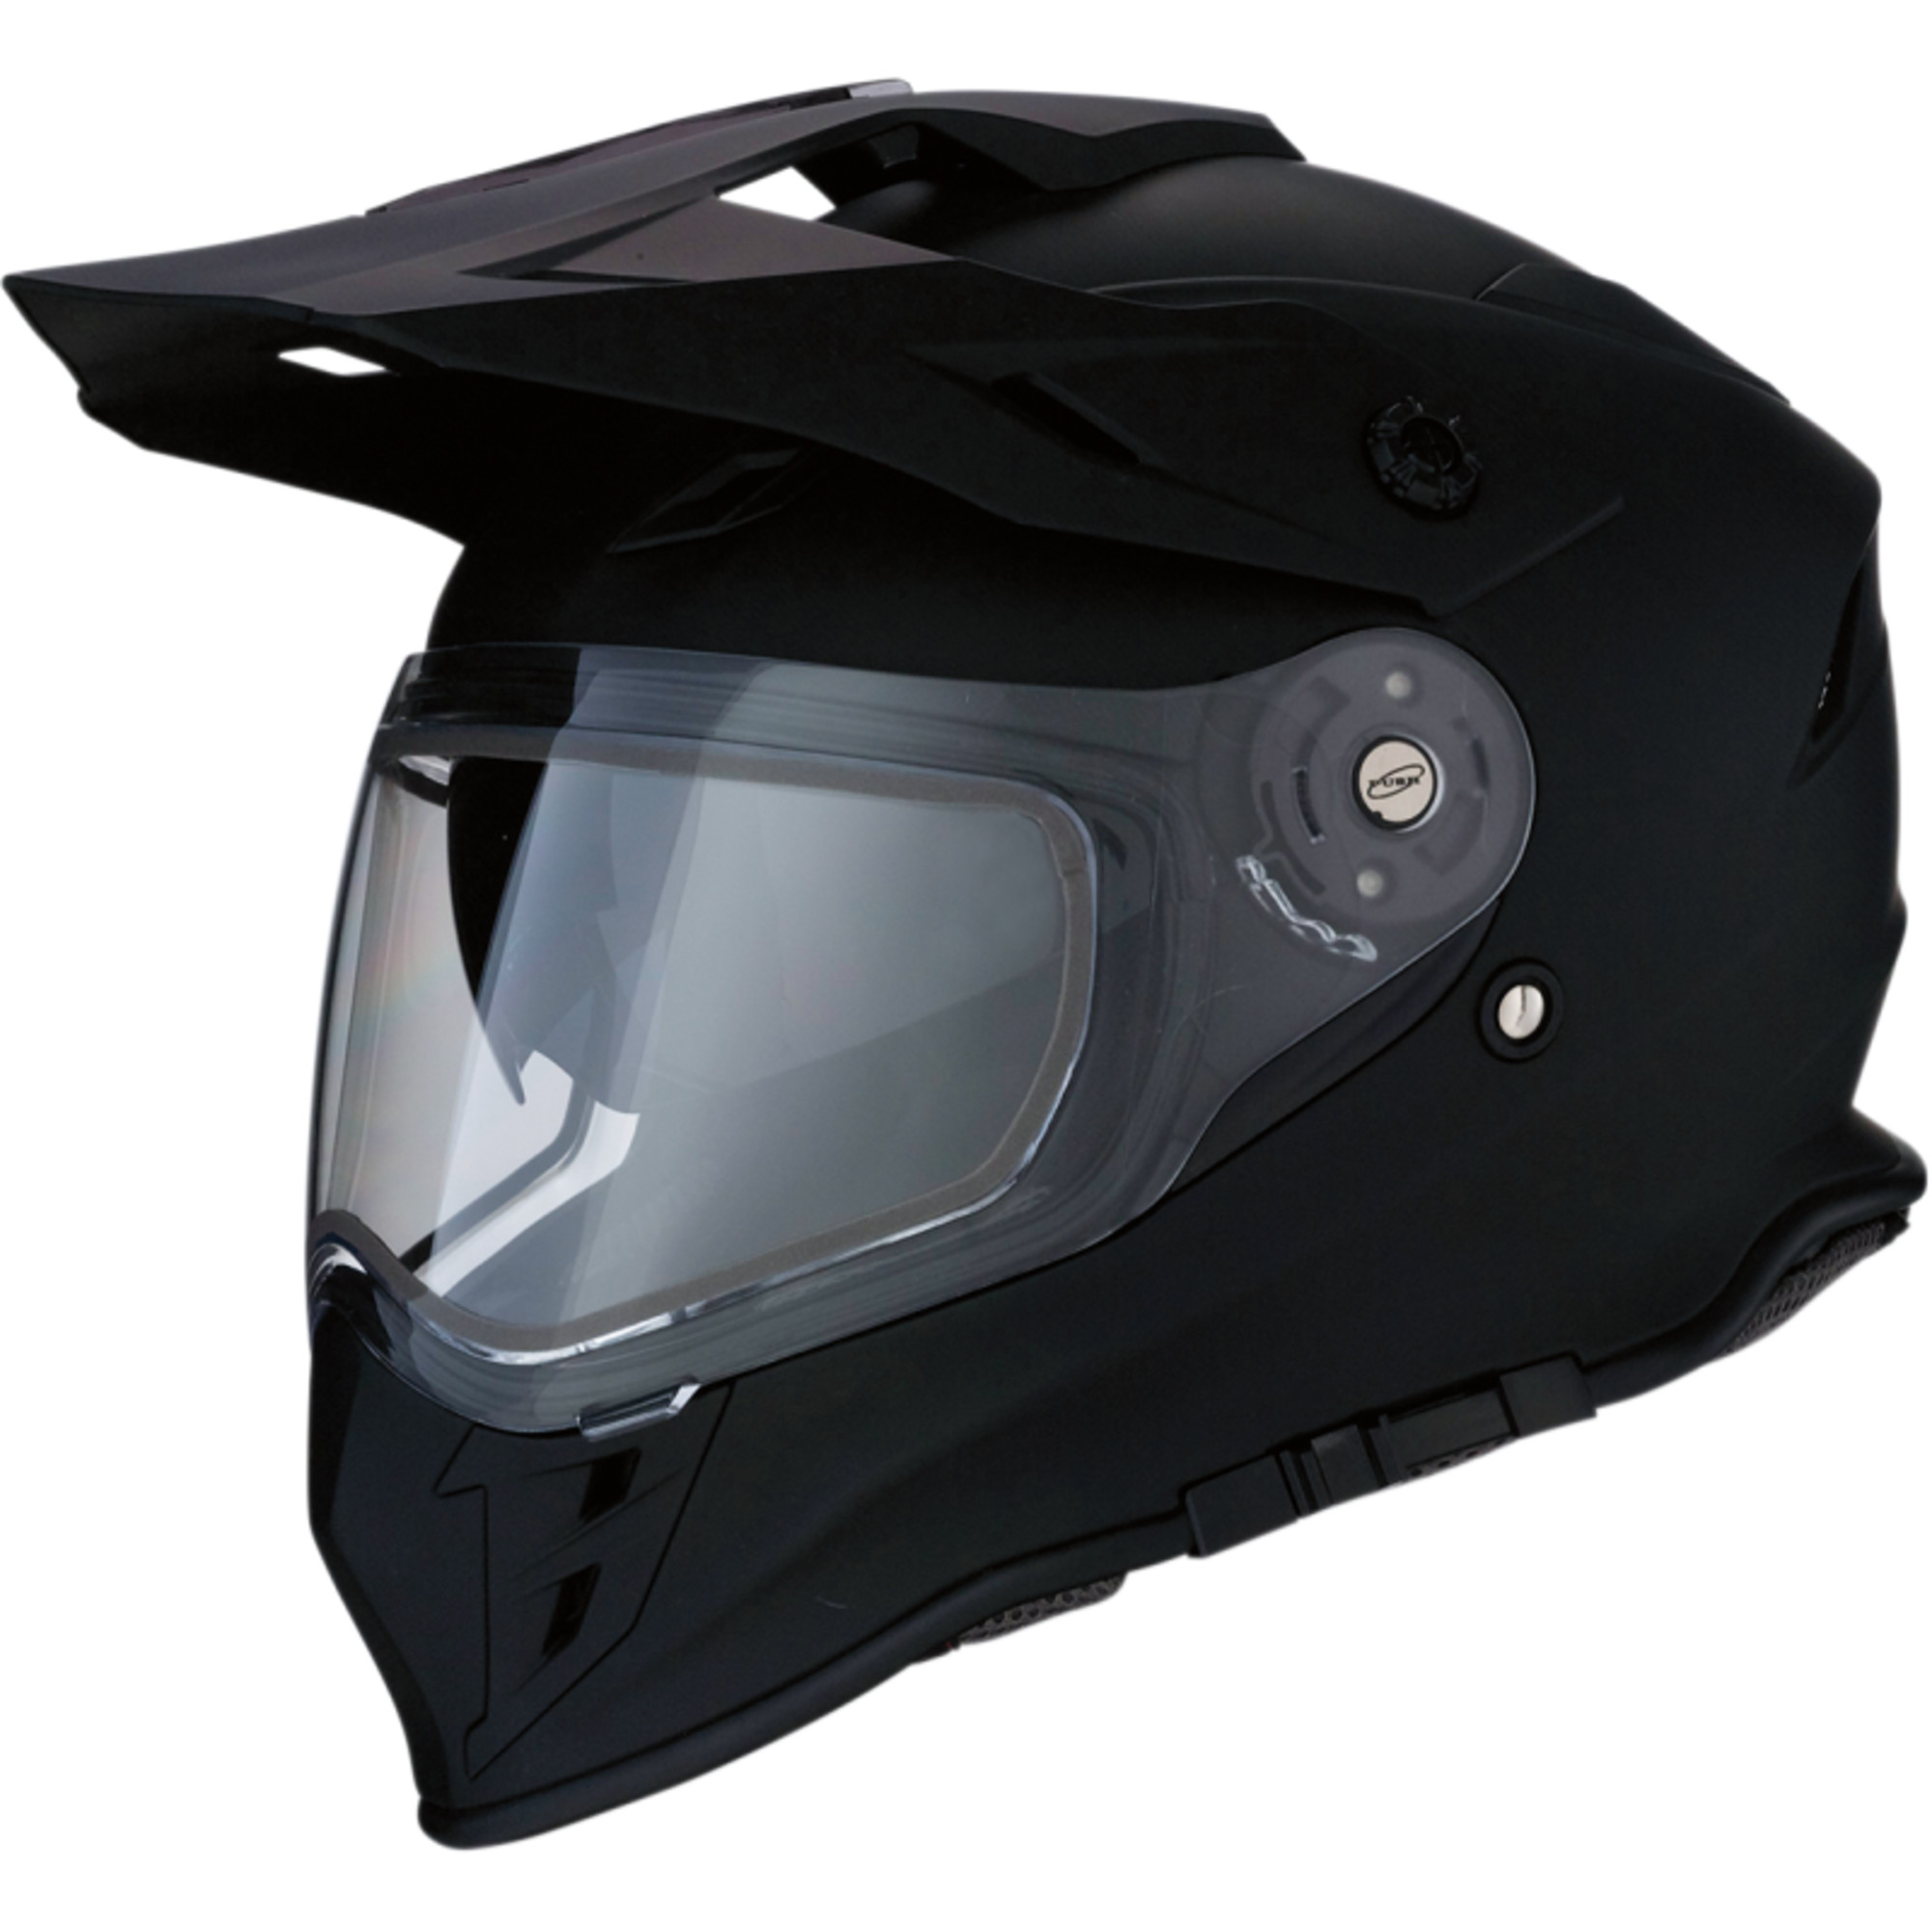 z1r dual shield full face helmets adult range snow